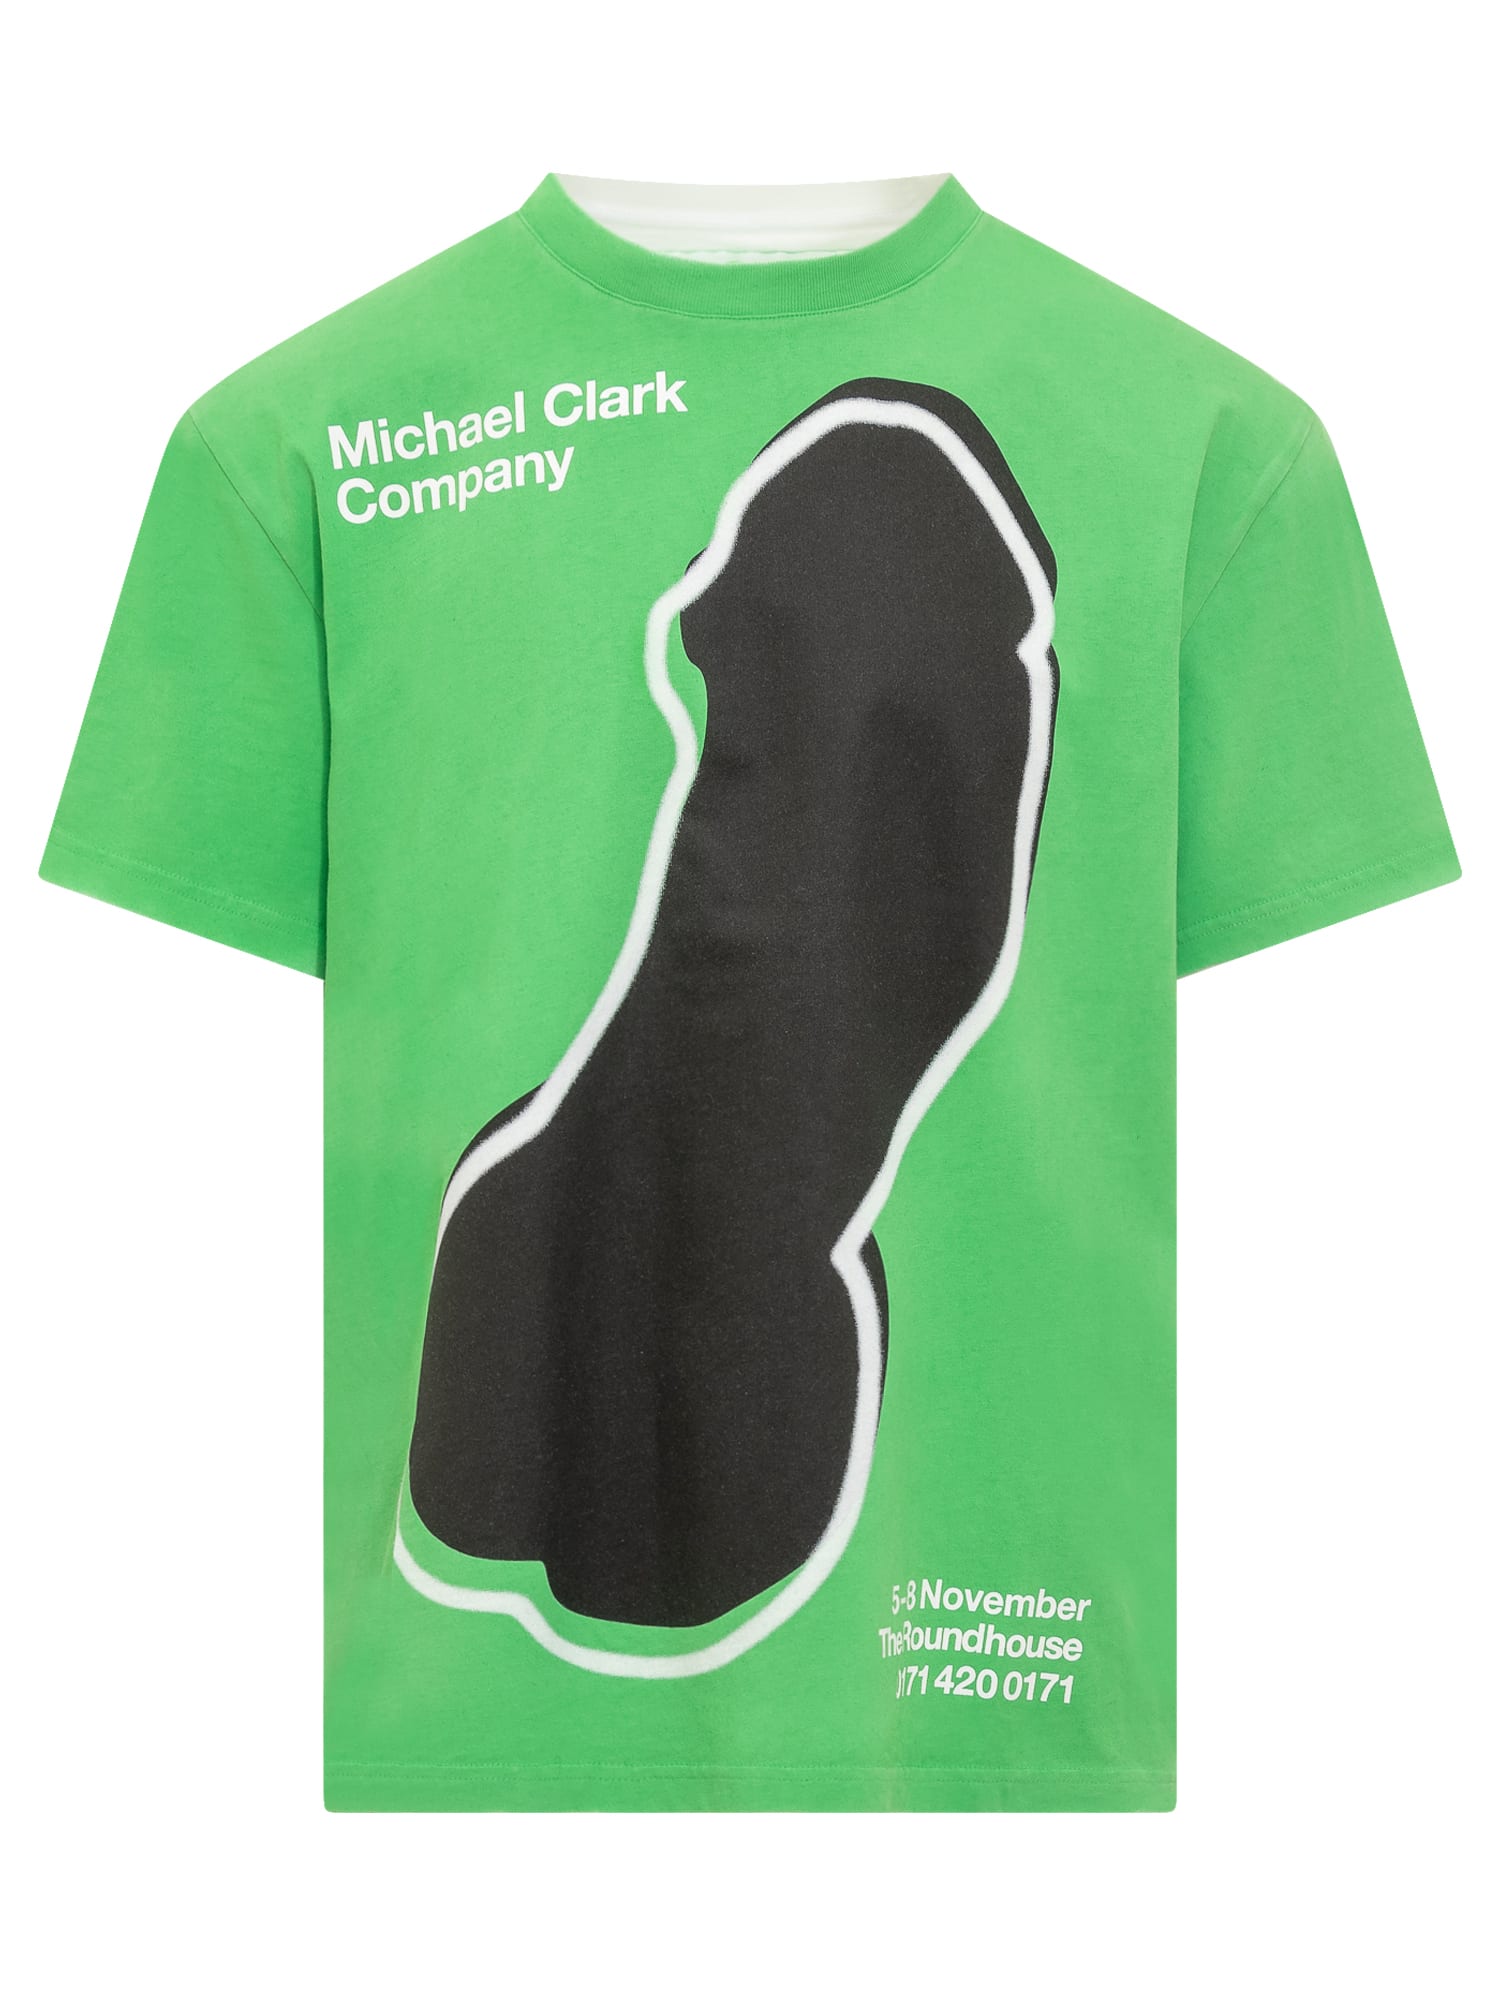 J.W. Anderson michael Clarck Company T-shirt